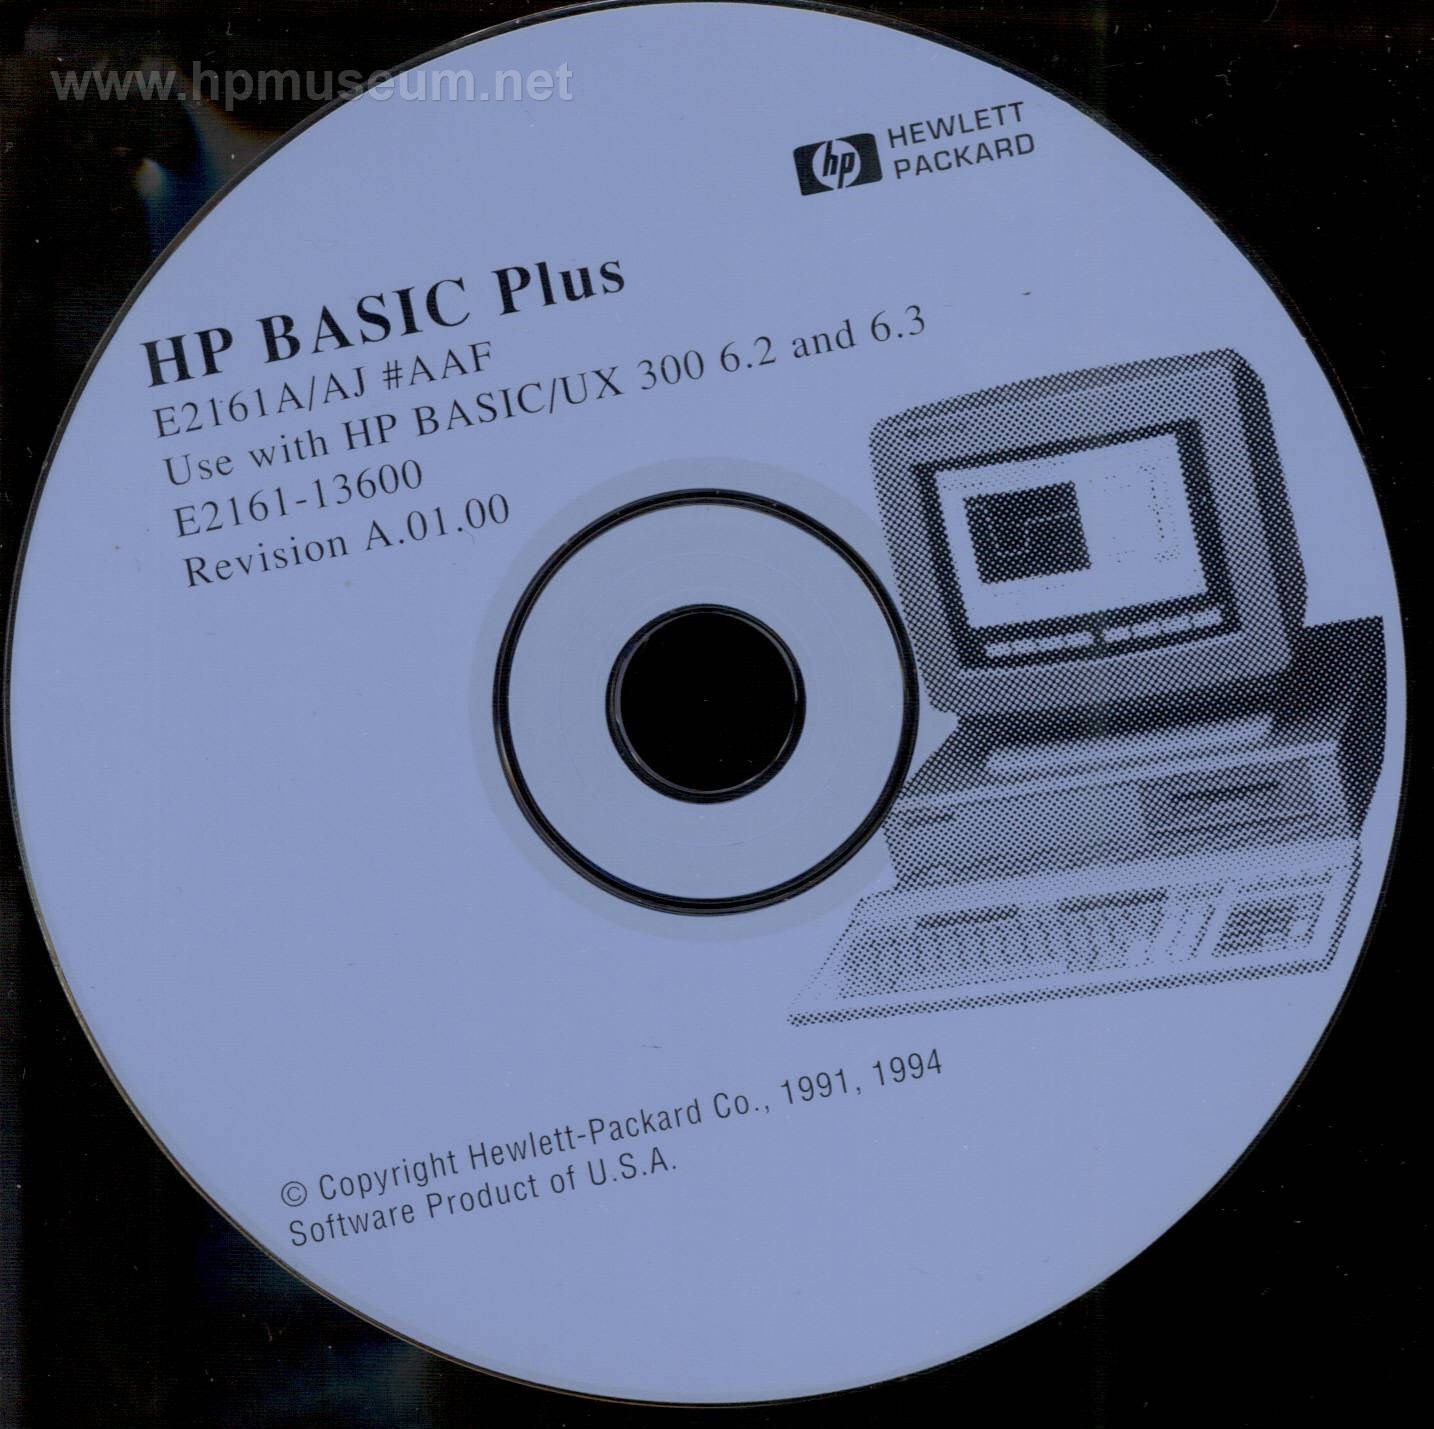 [Image: E2161-13600_BASIC-PLUS_6.2-6.3_Disc.jpg]